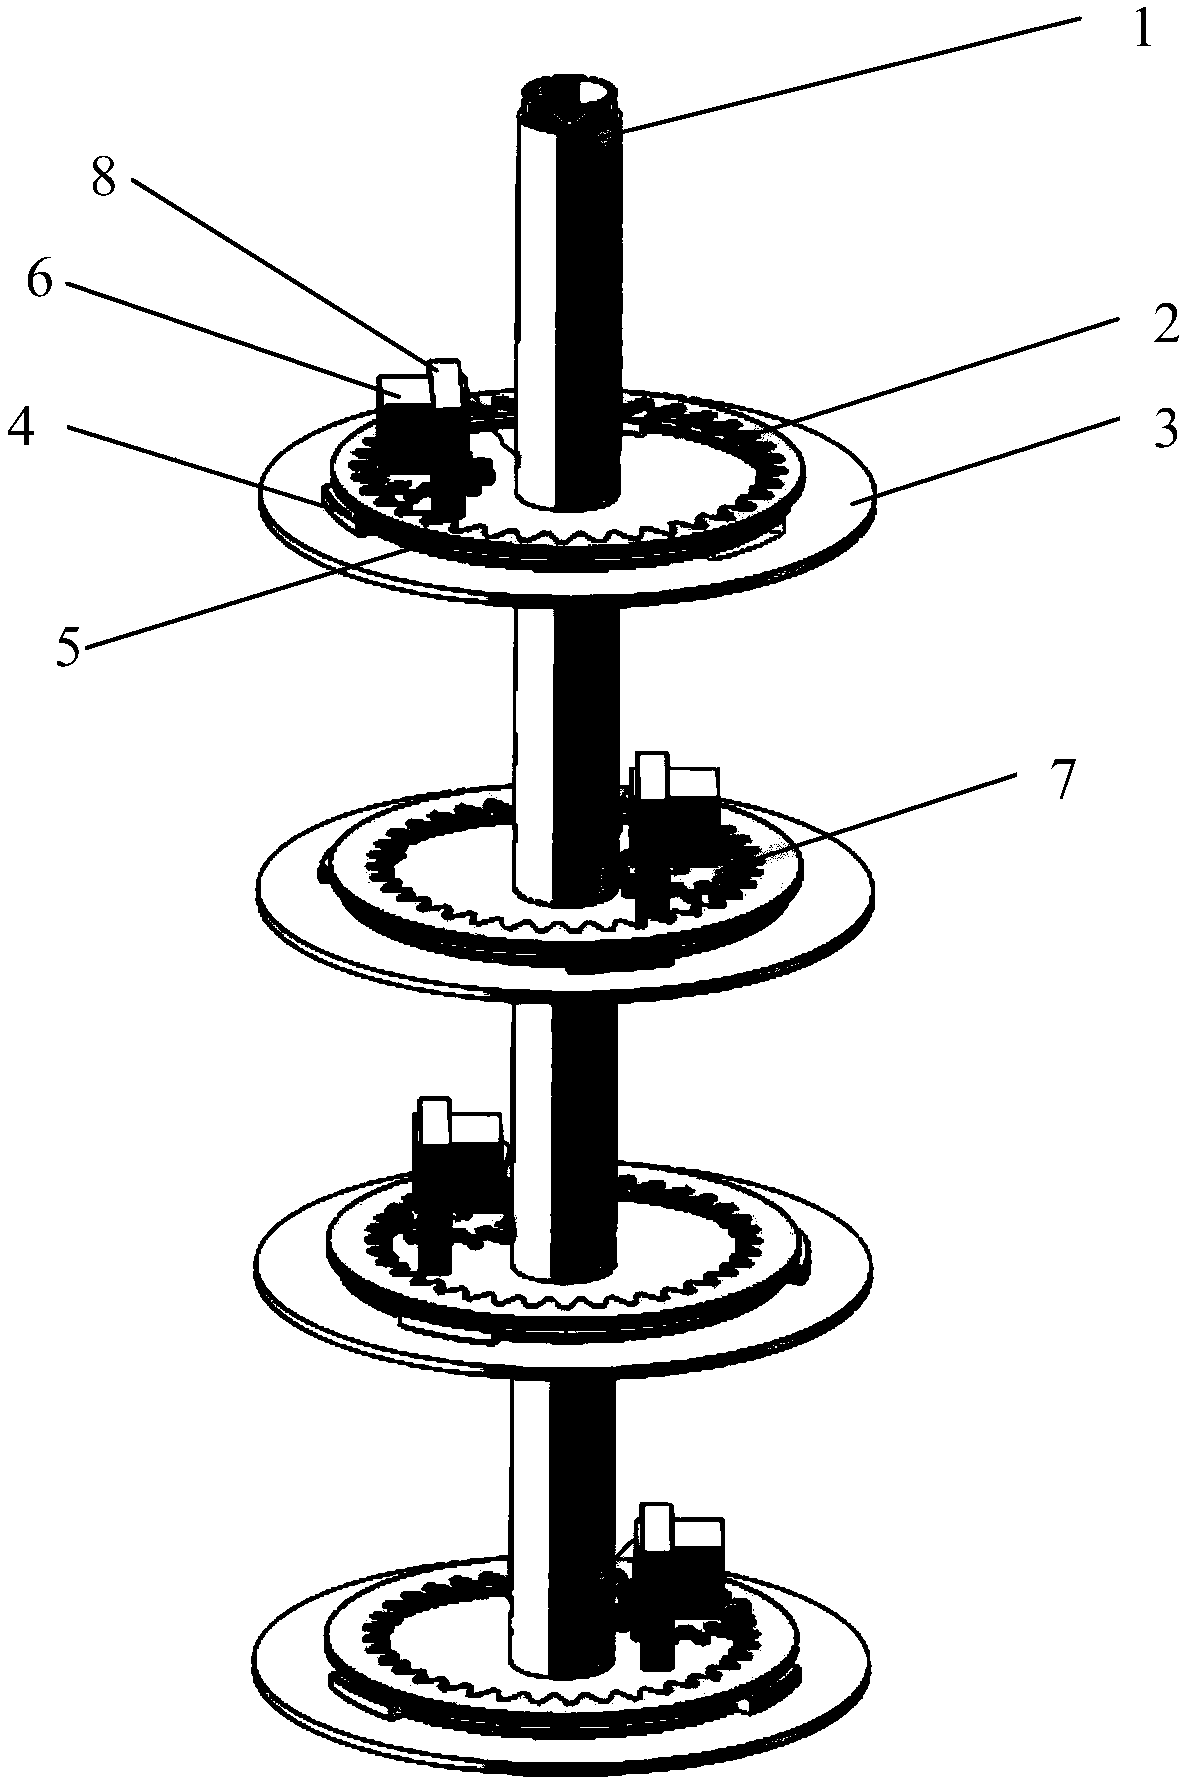 Multi-layer independent rotating platform